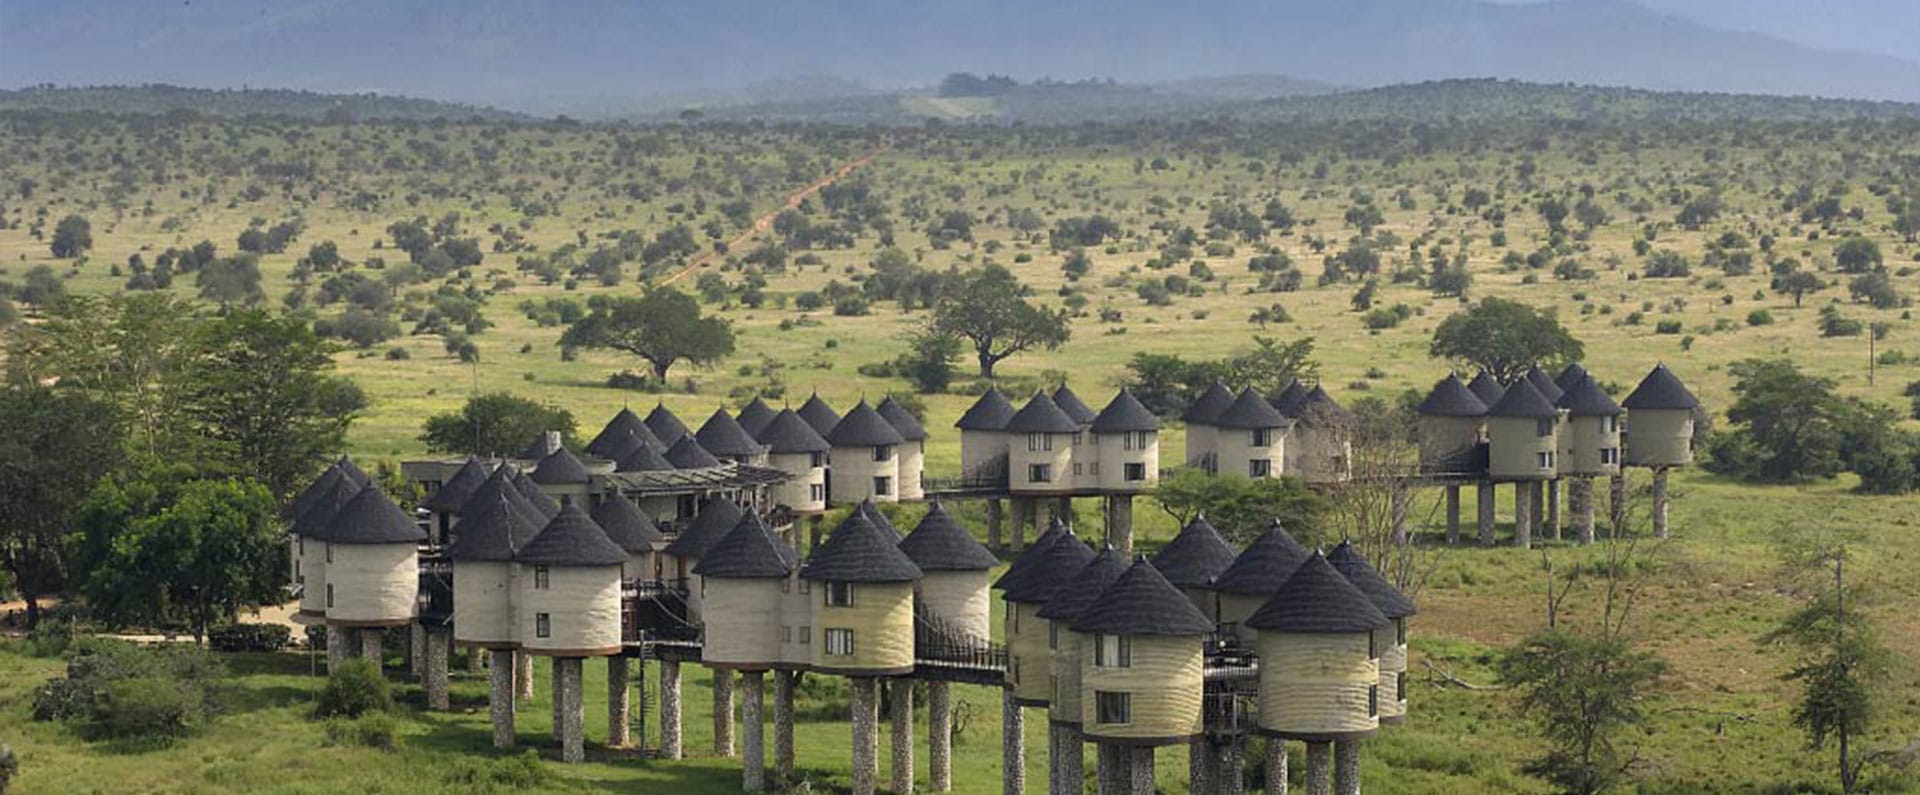 Tsavo National Park accommodation 